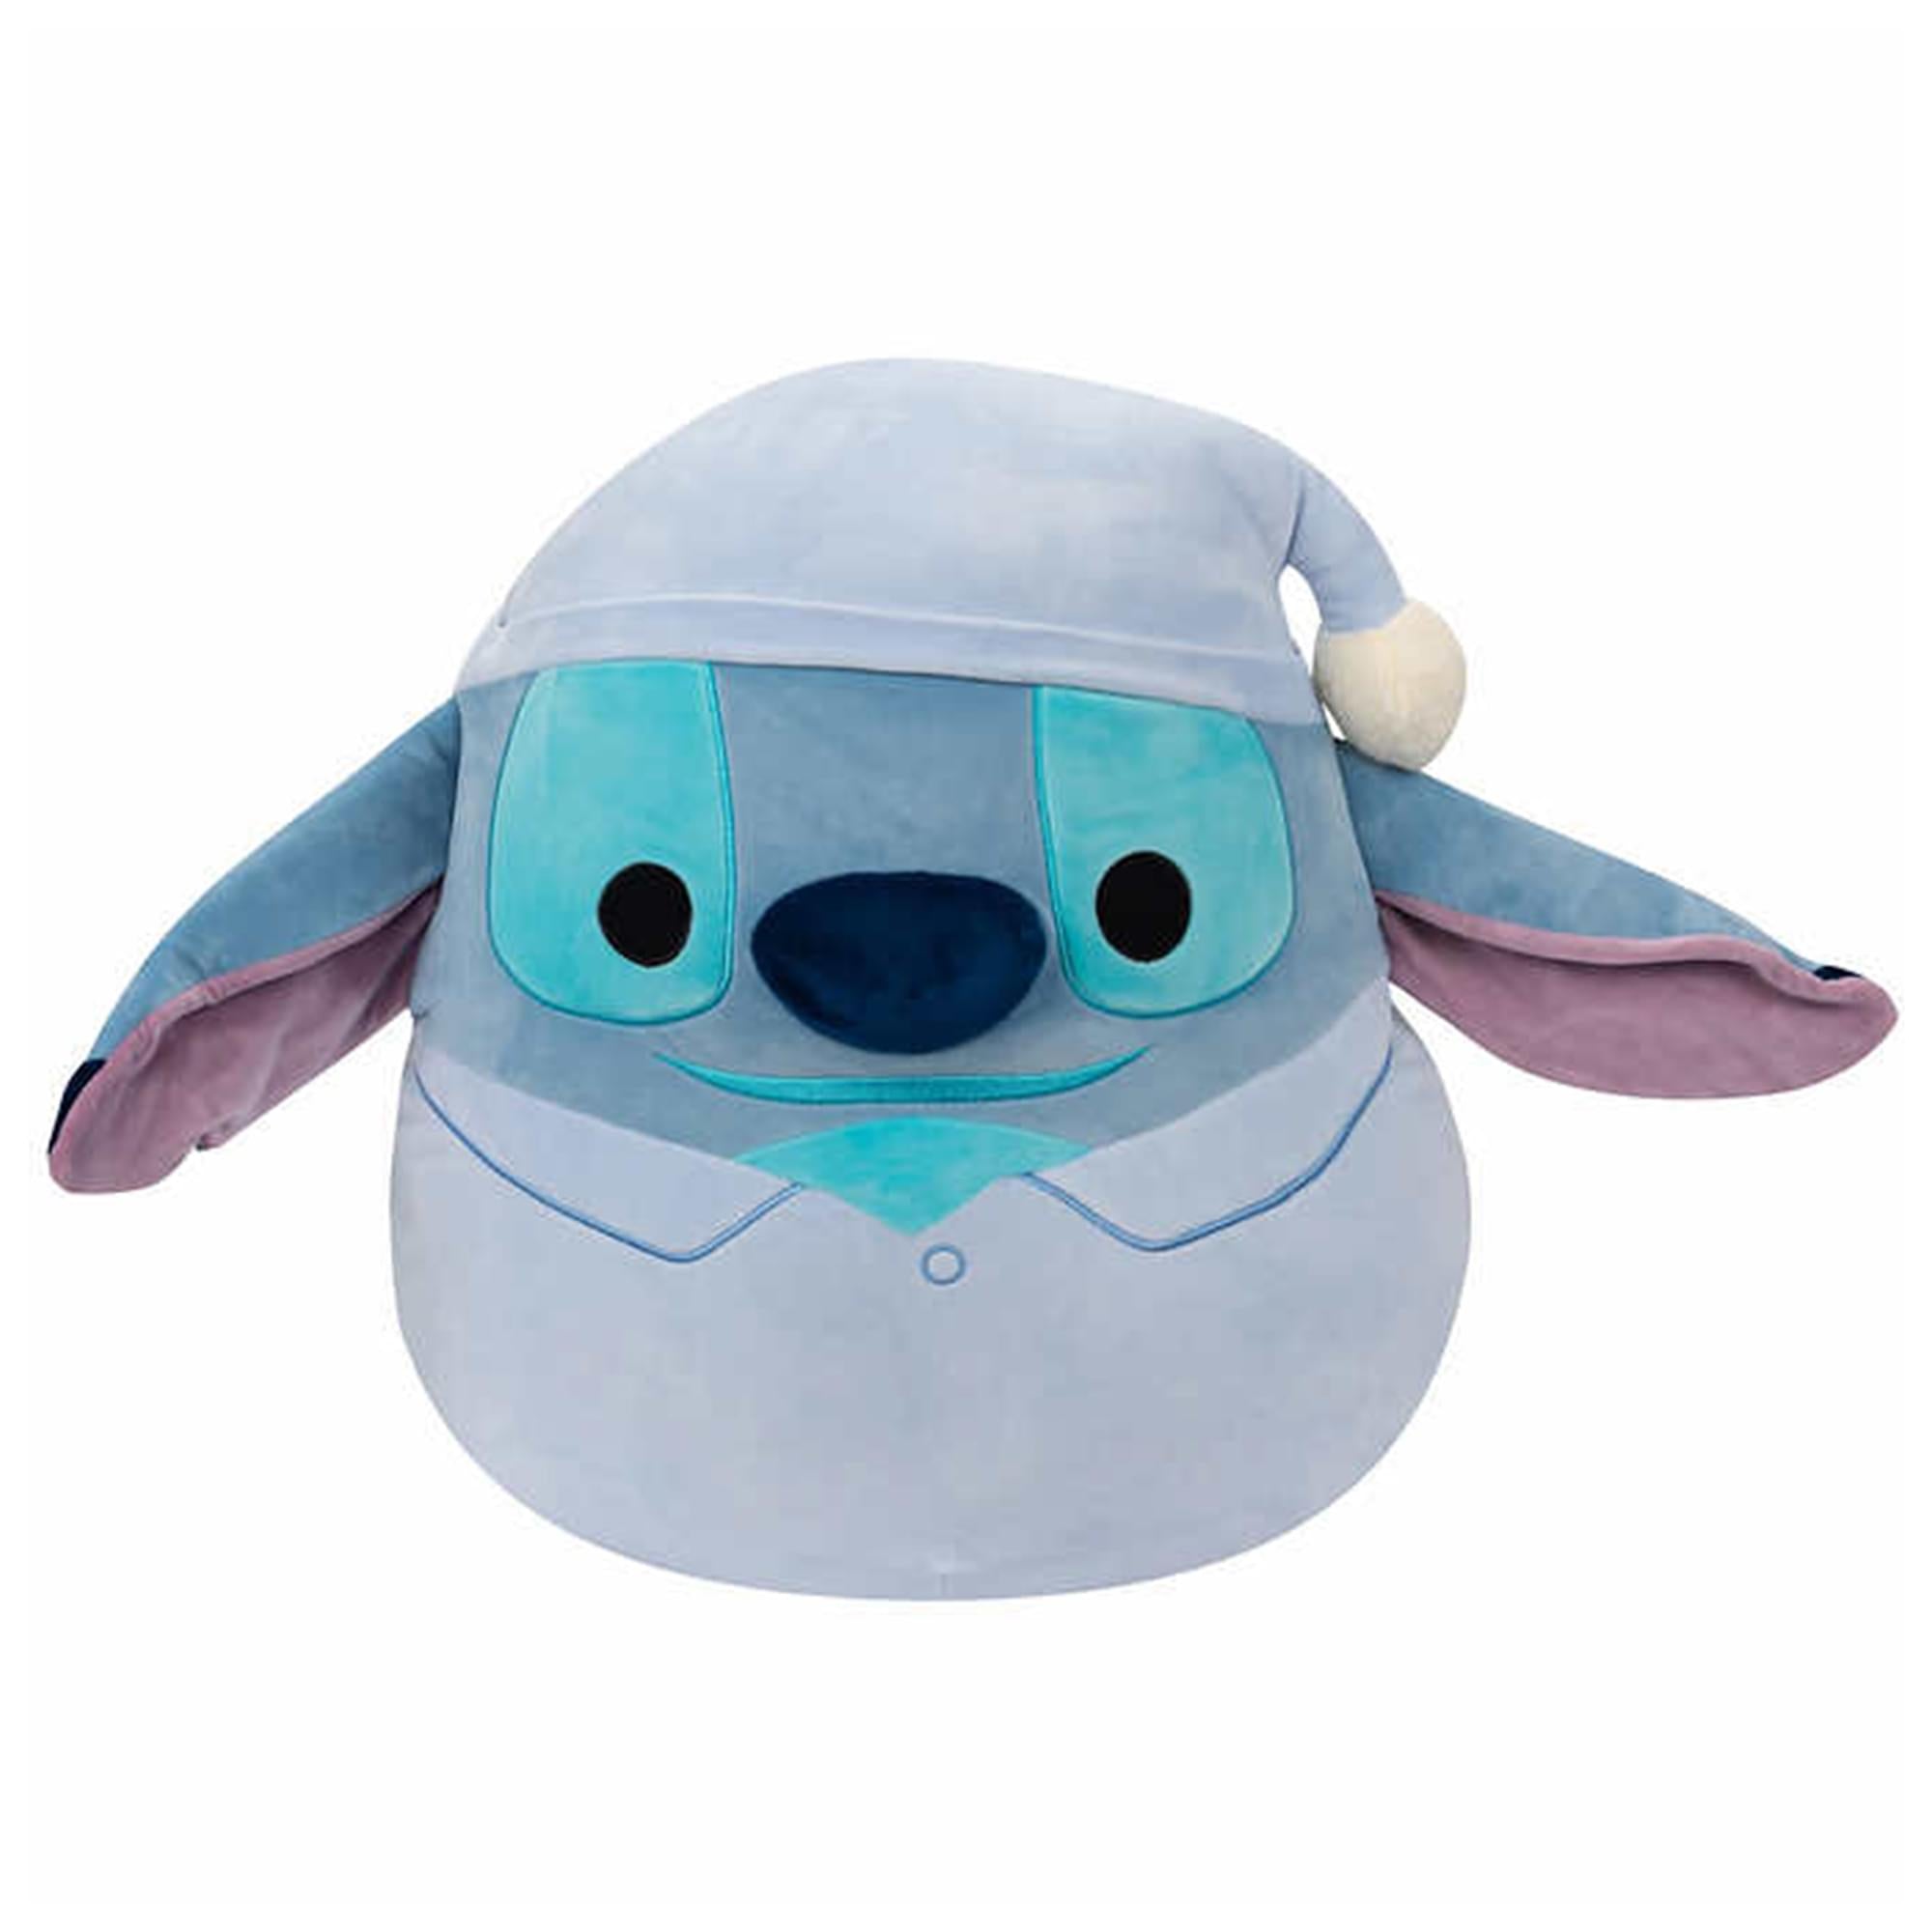 Lilo/Stitch Plush Toys – Fluffy Huggables Zone